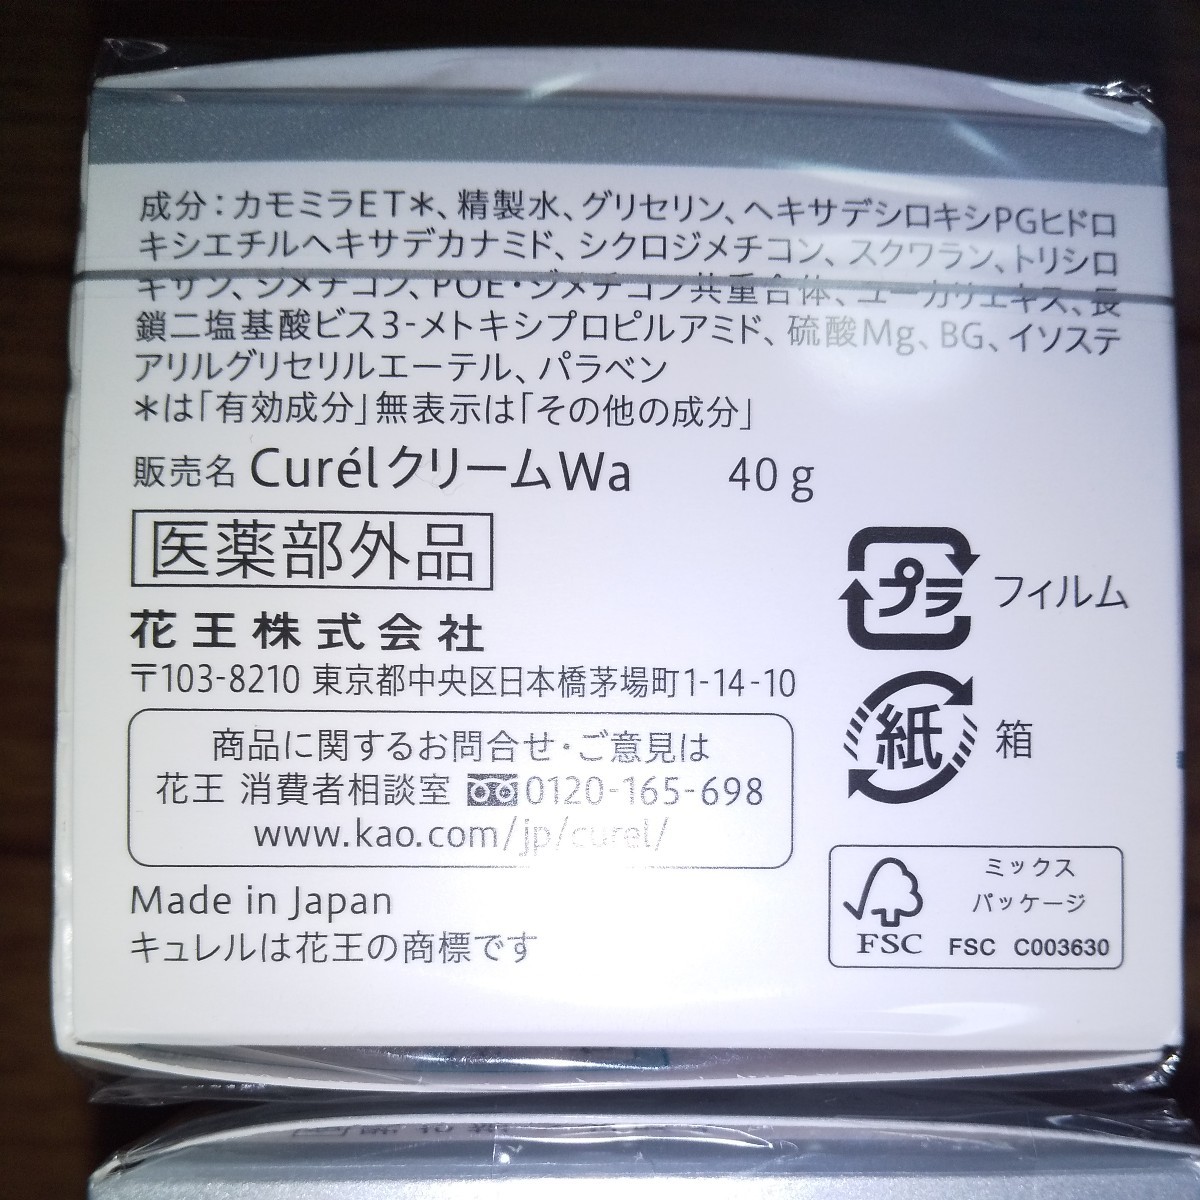 ☆Curel シミソバカス予防ケア フェイスクリーム 40g  2個セット 新品未使用 乾燥性敏感肌に最適です お買い得の画像4